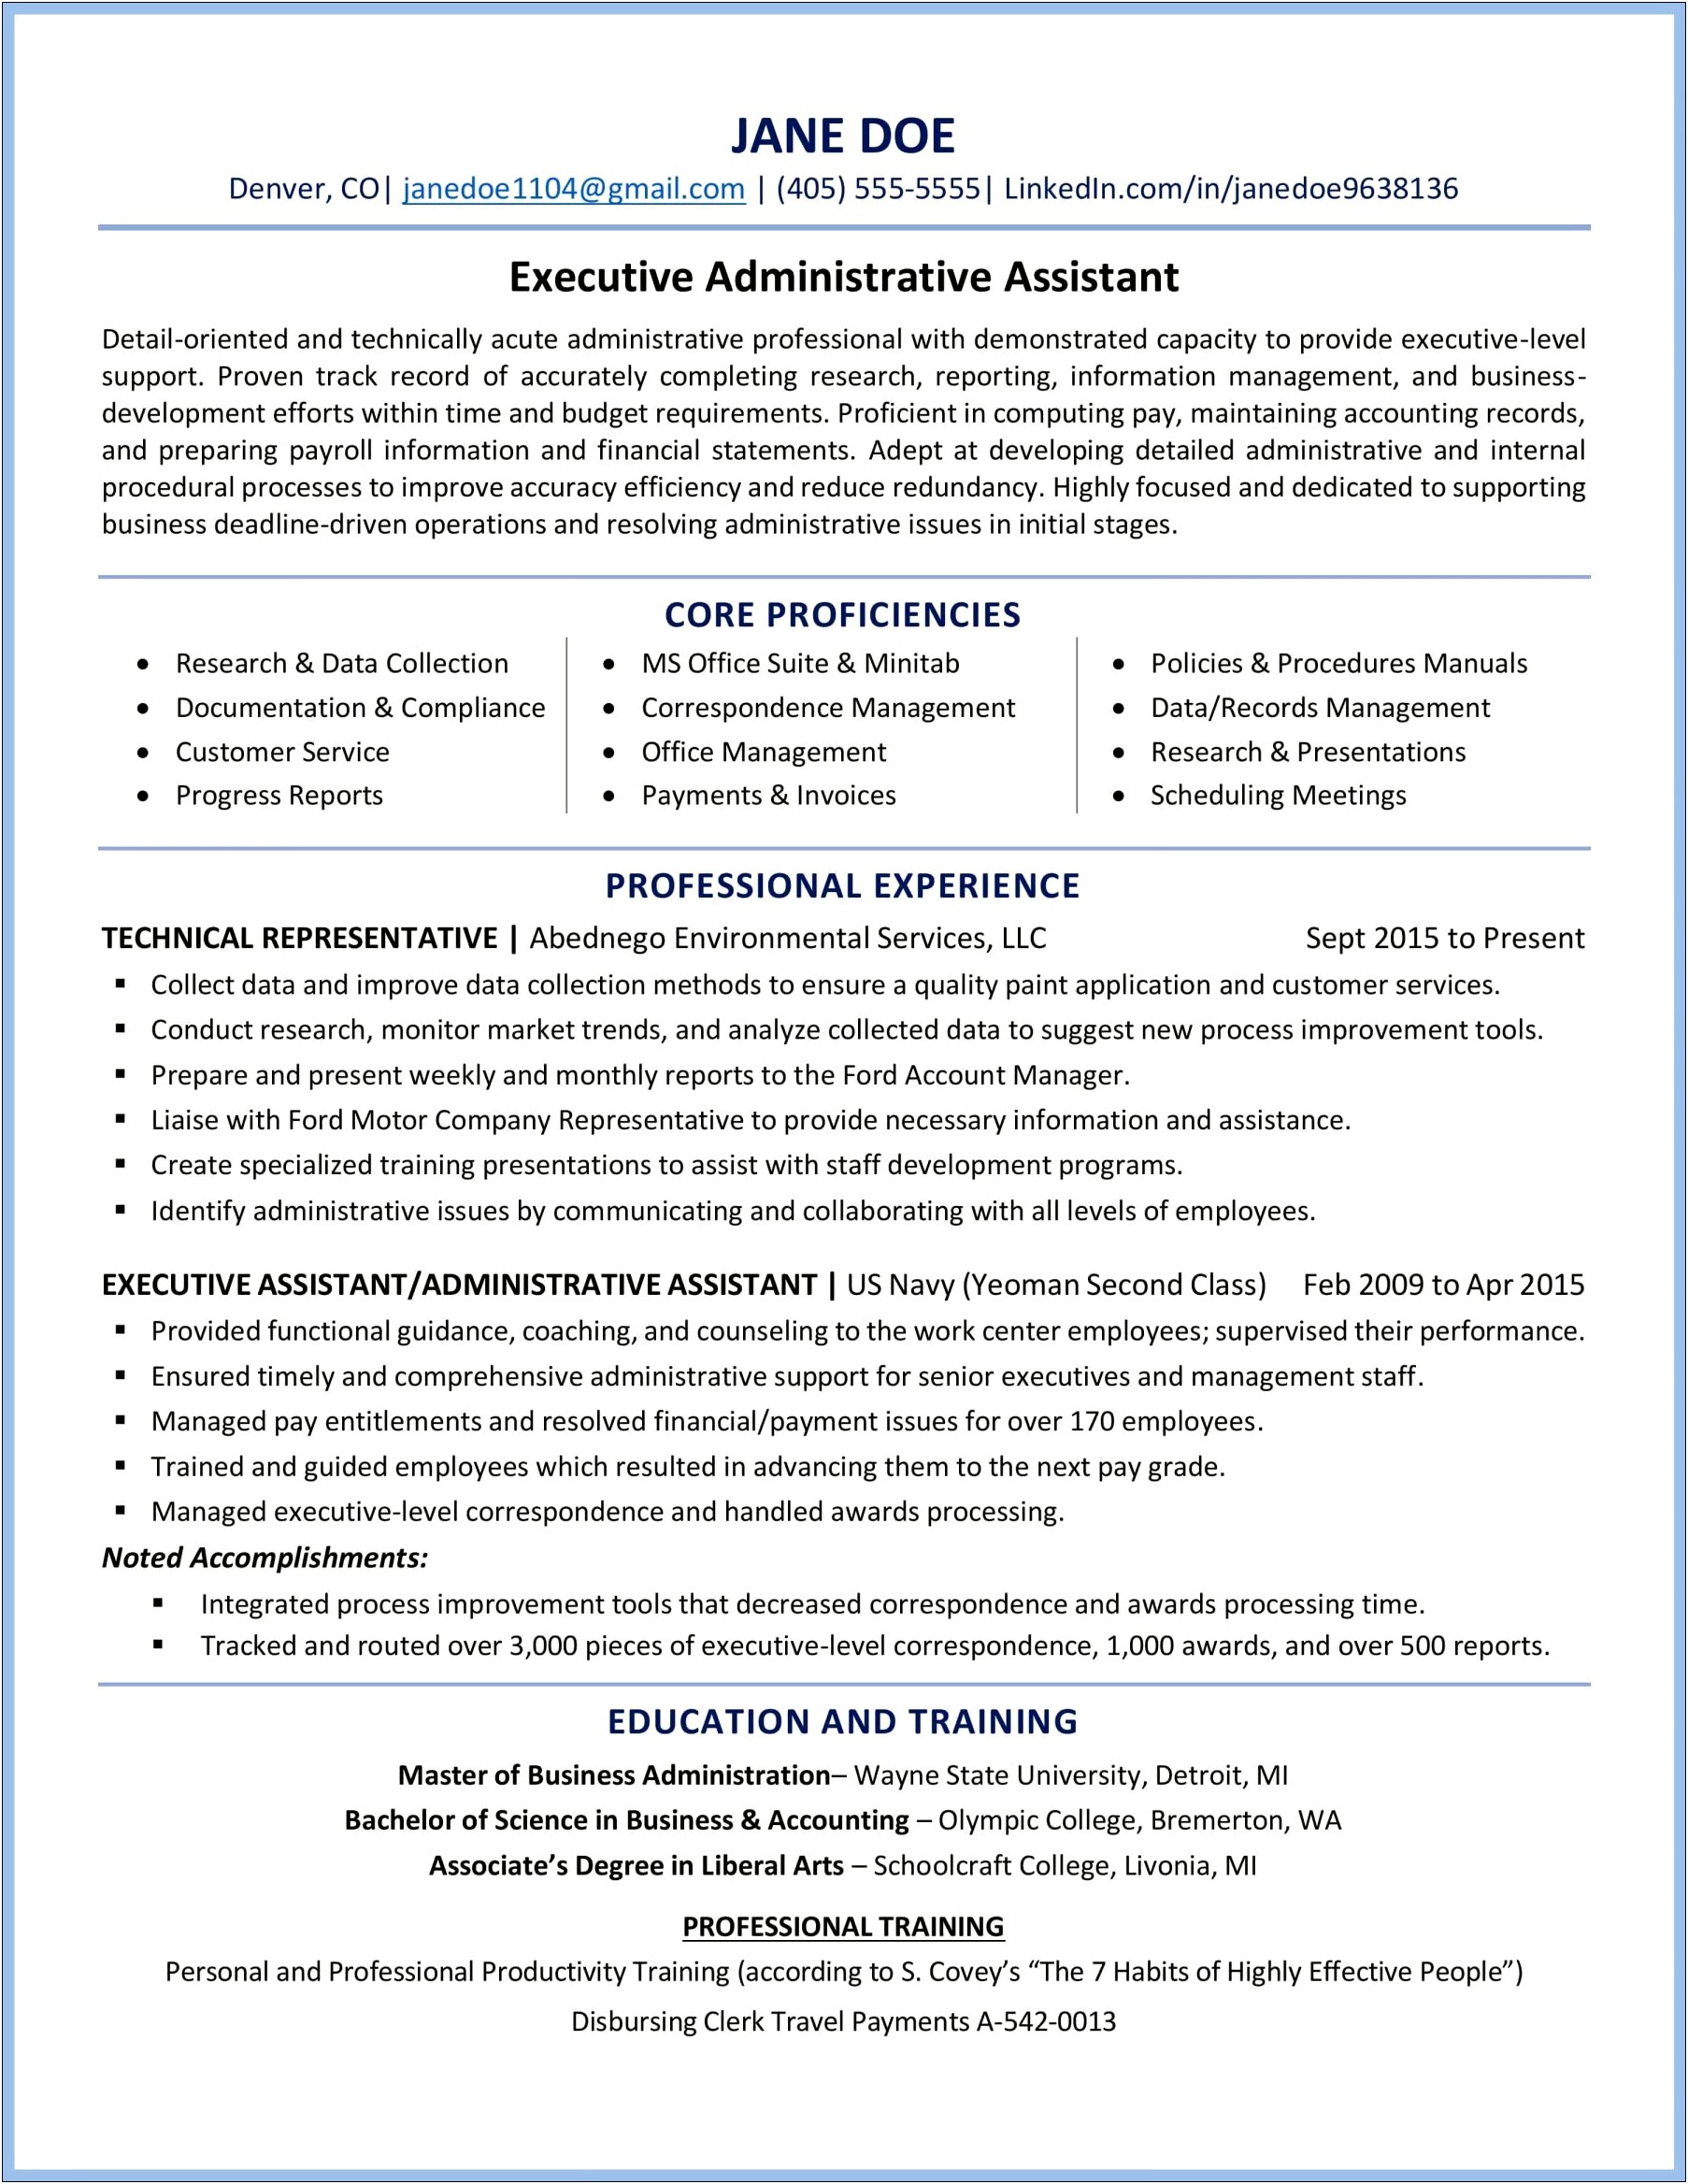 Sample Resume For Executive Administrator